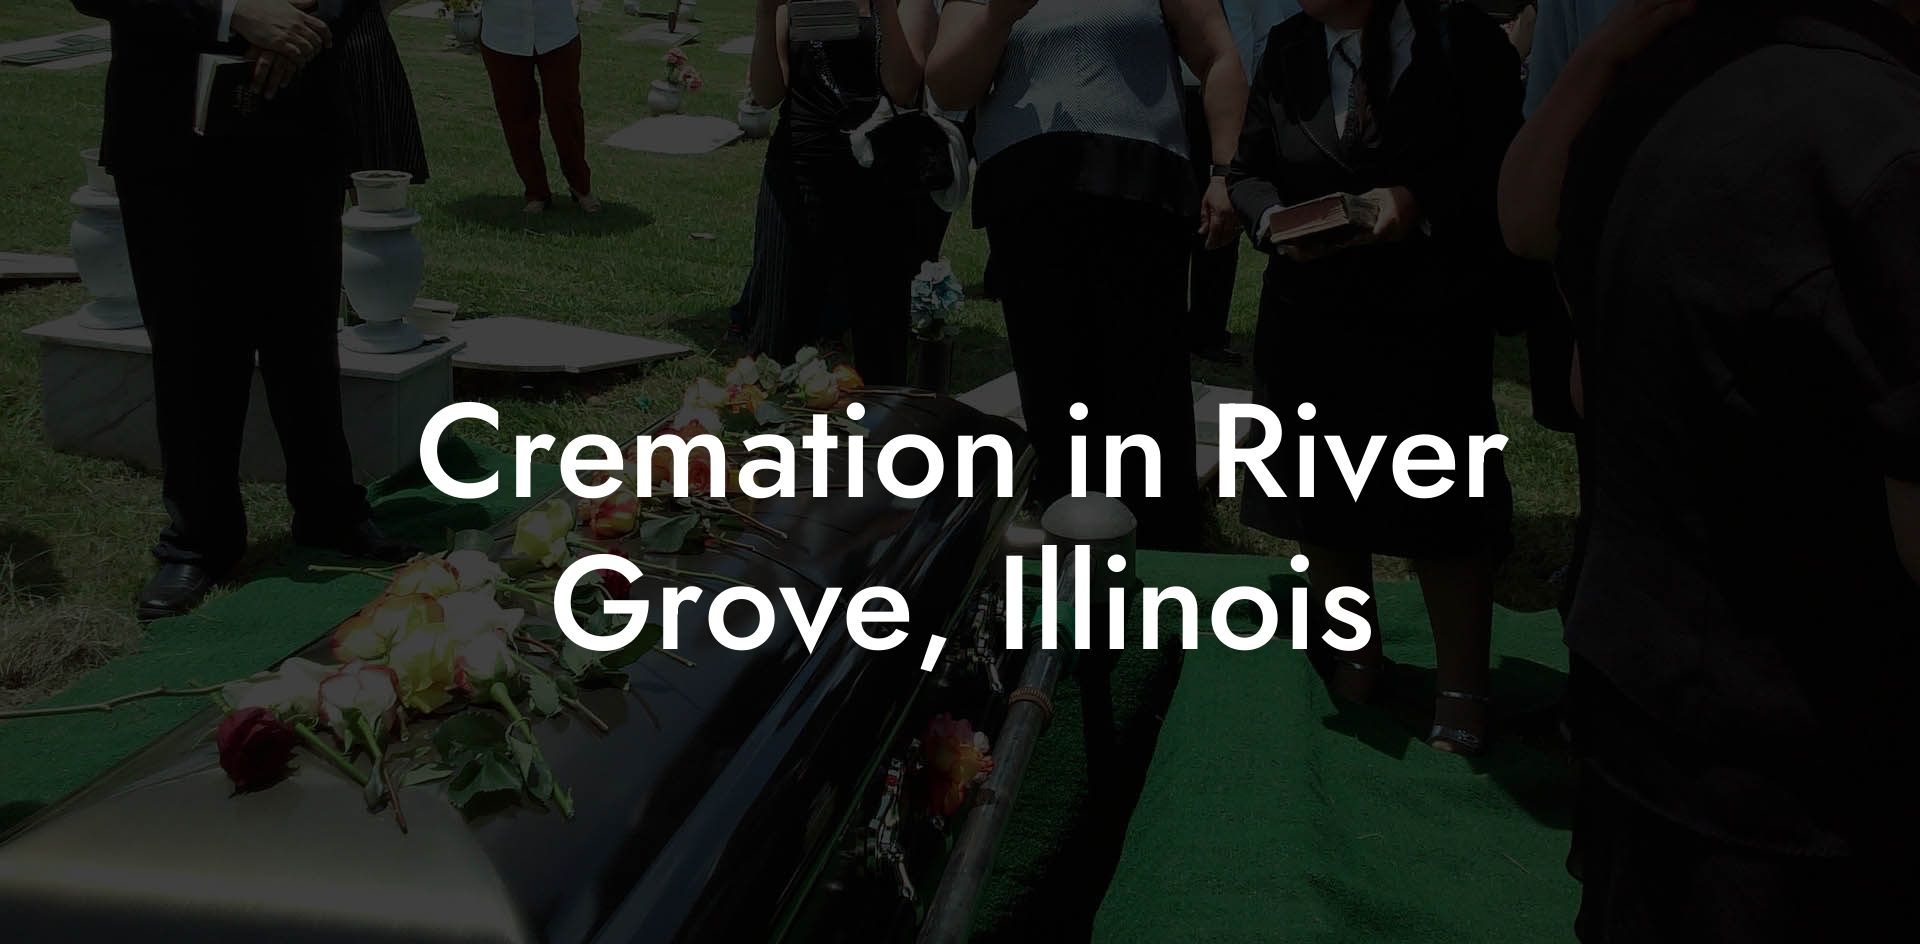 Cremation in River Grove, Illinois